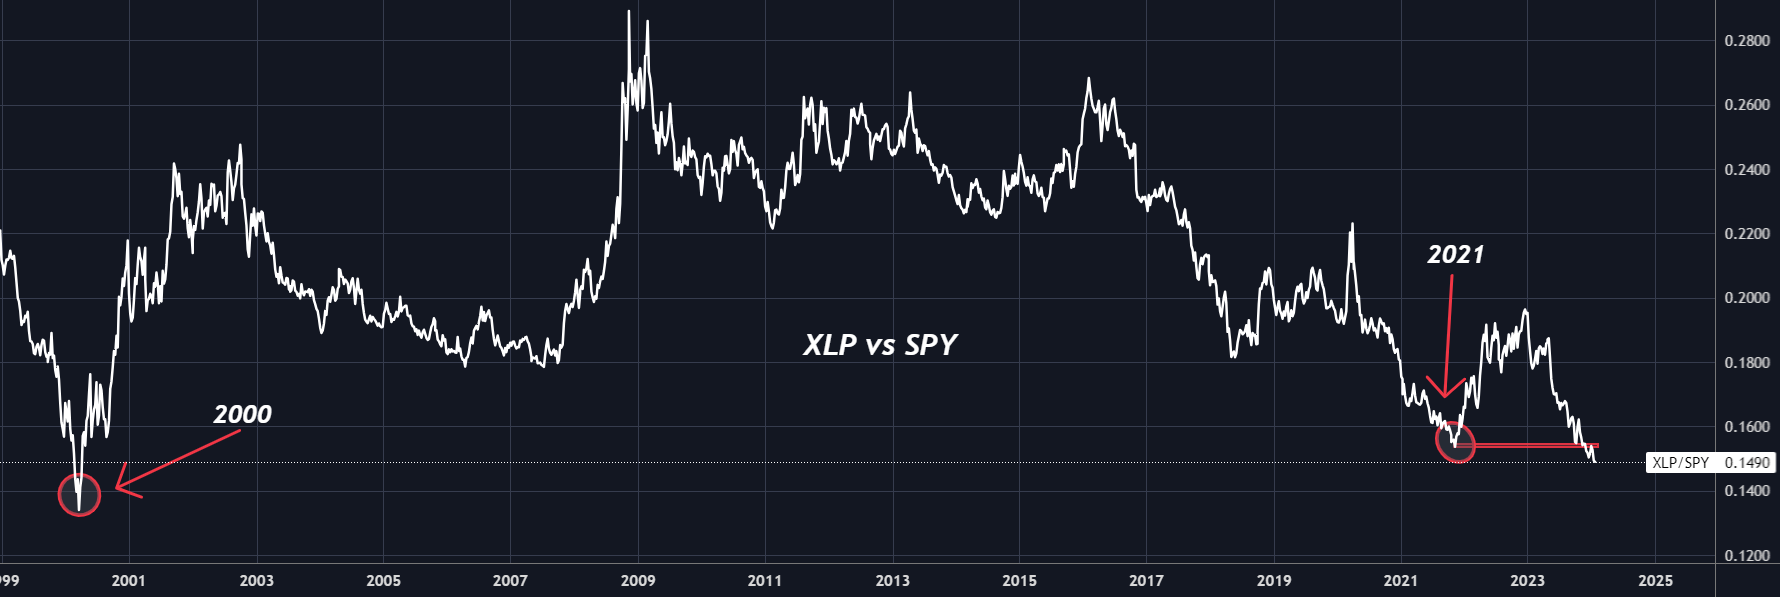 XLP vs SPY